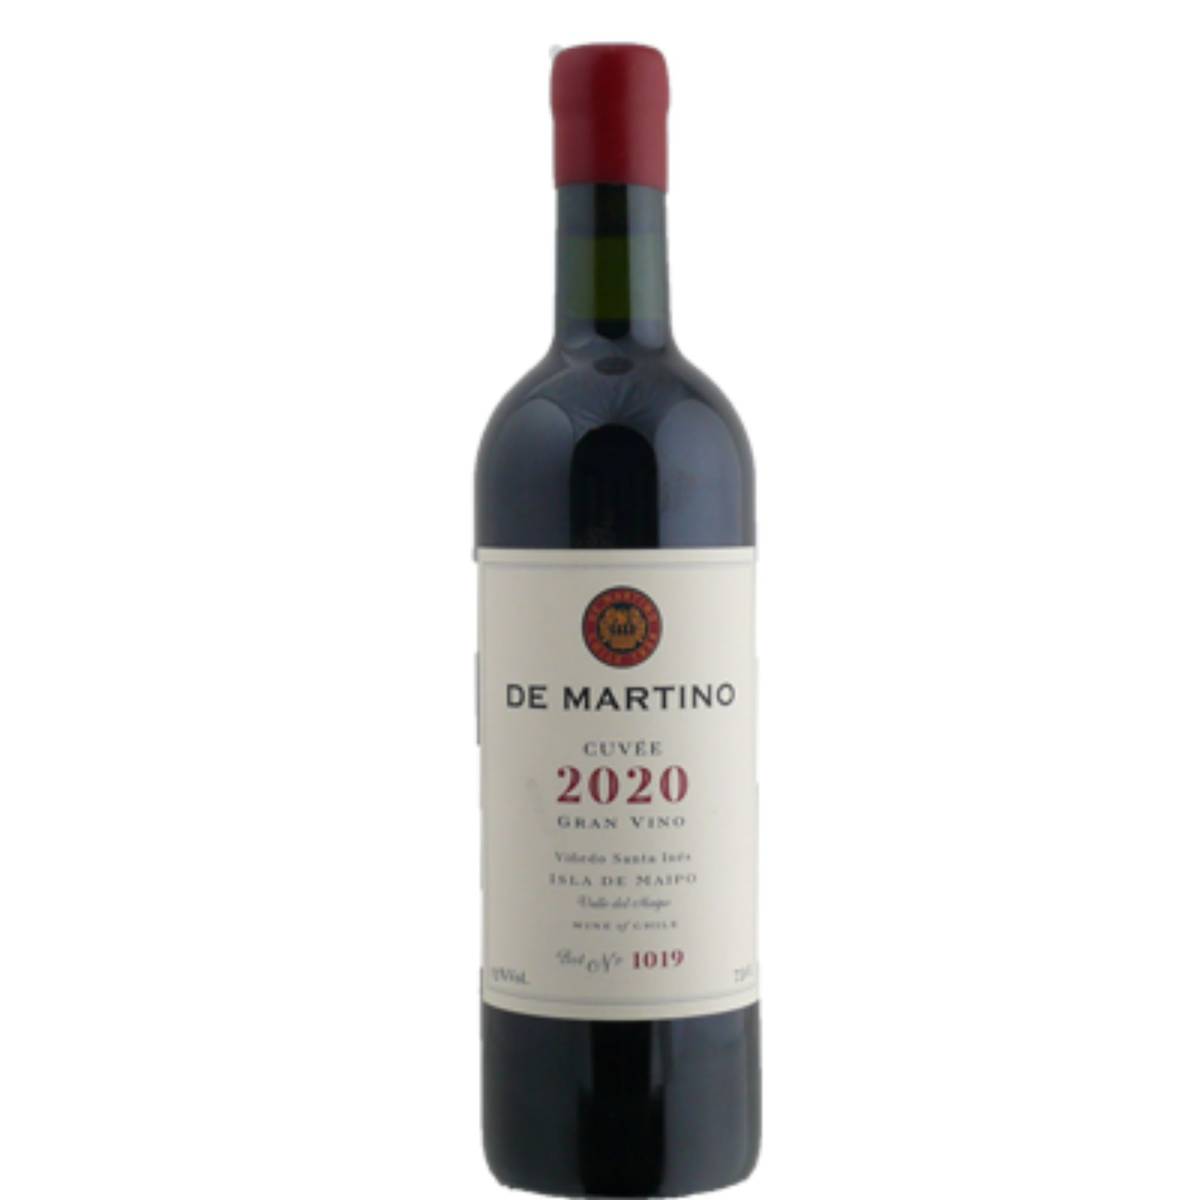 De Martino Cuvee Gran Vino 2020 De Martino Cuvee Gran Vino 2020 - www.henribloem.nl - Henri Bloem